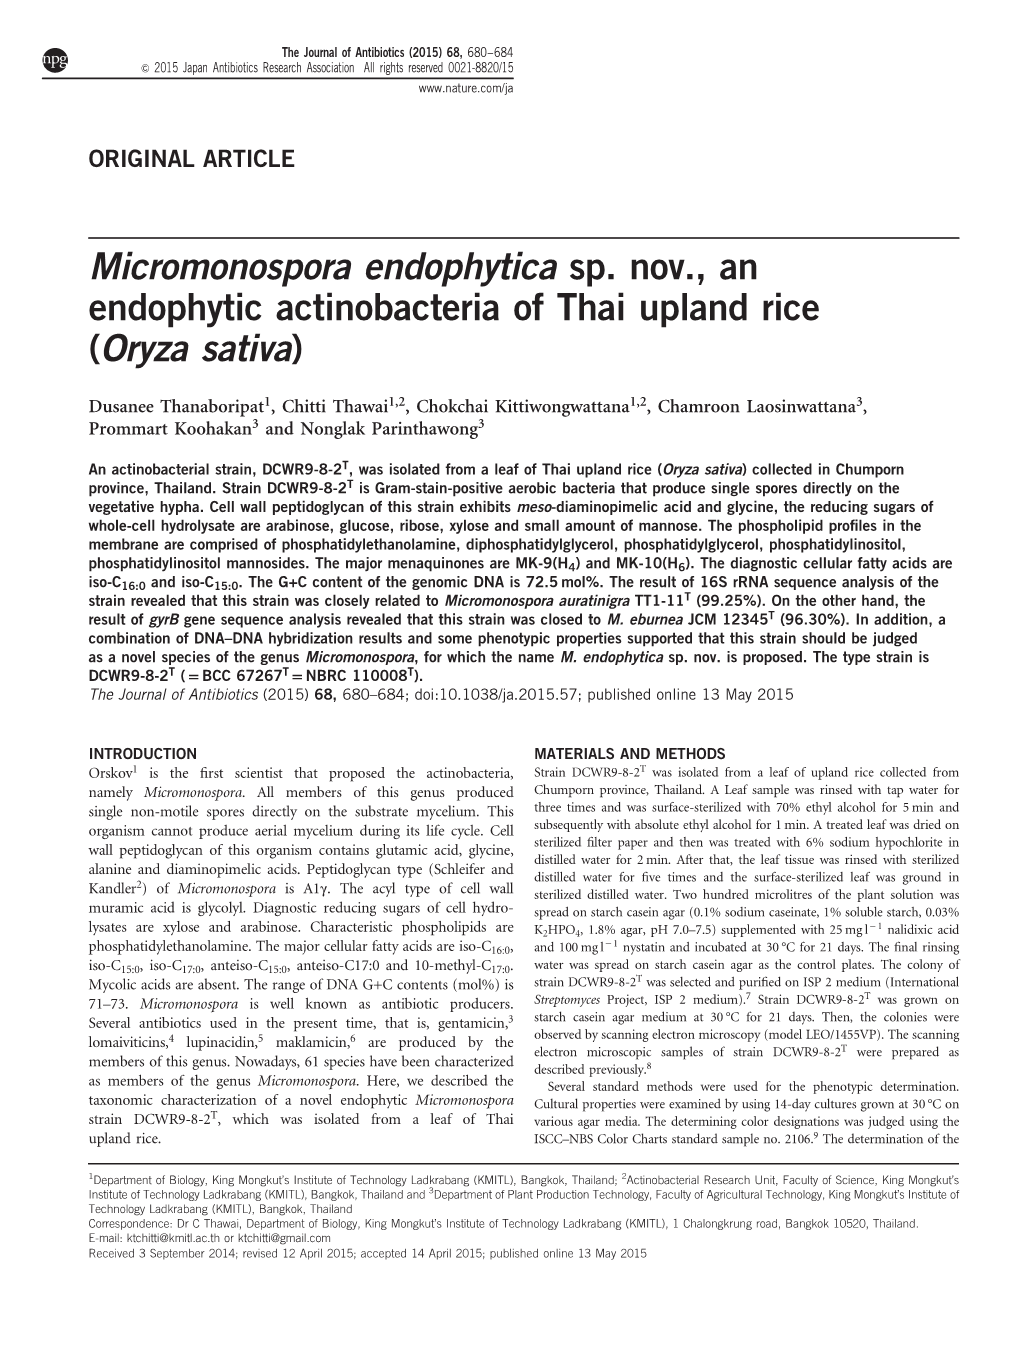 Micromonospora Endophytica Sp. Nov., an Endophytic Actinobacteria of Thai Upland Rice (Oryza Sativa)